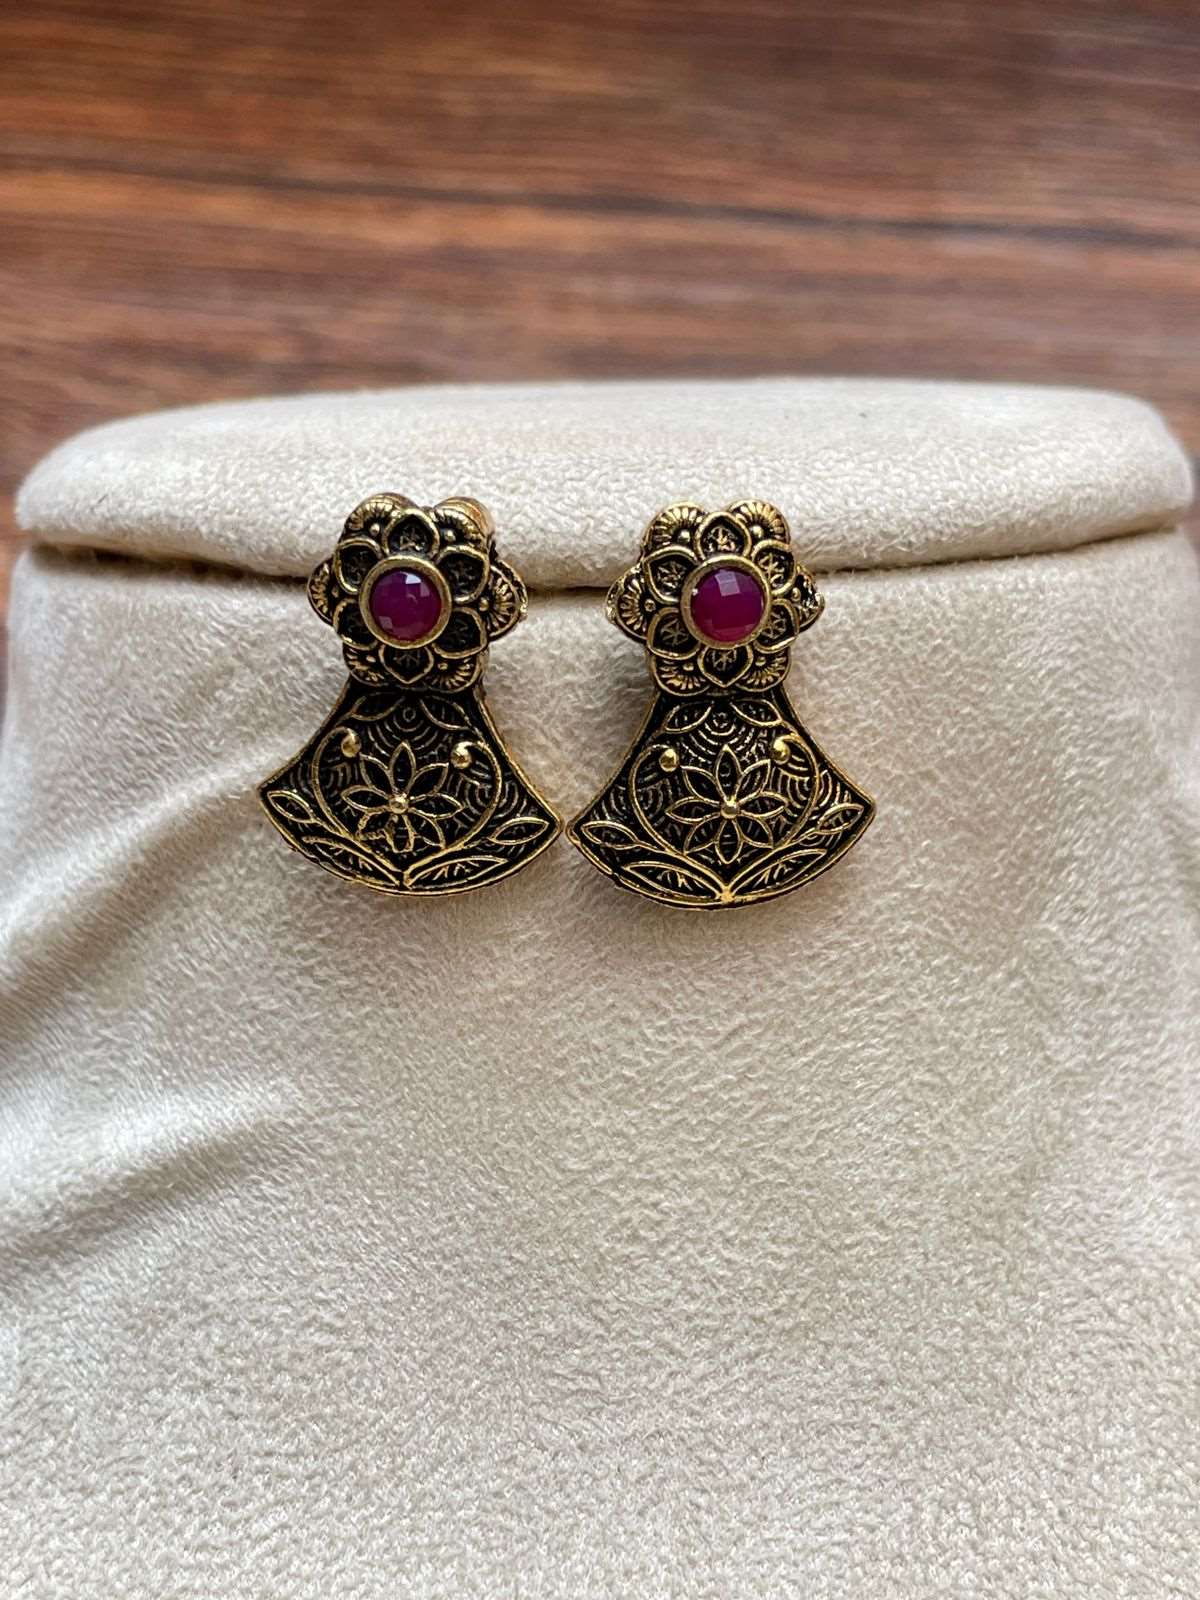 Antique Golden Necklace - Abdesignsjewellery